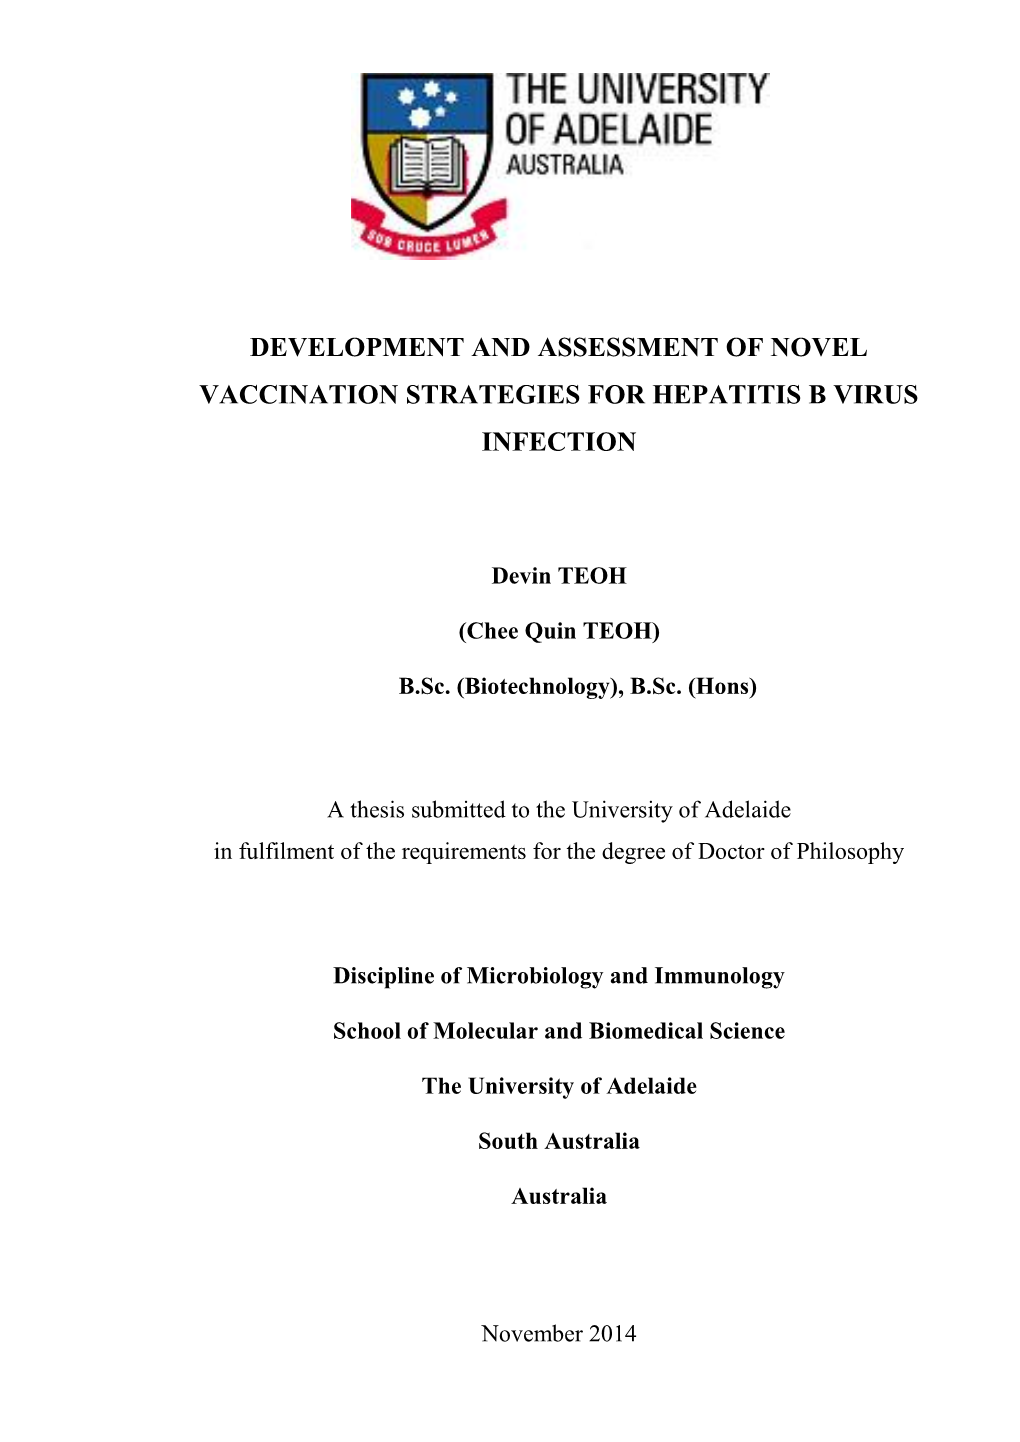 Development and Assessment of Novel Vaccination Strategies for Hepatitis B Virus Infection